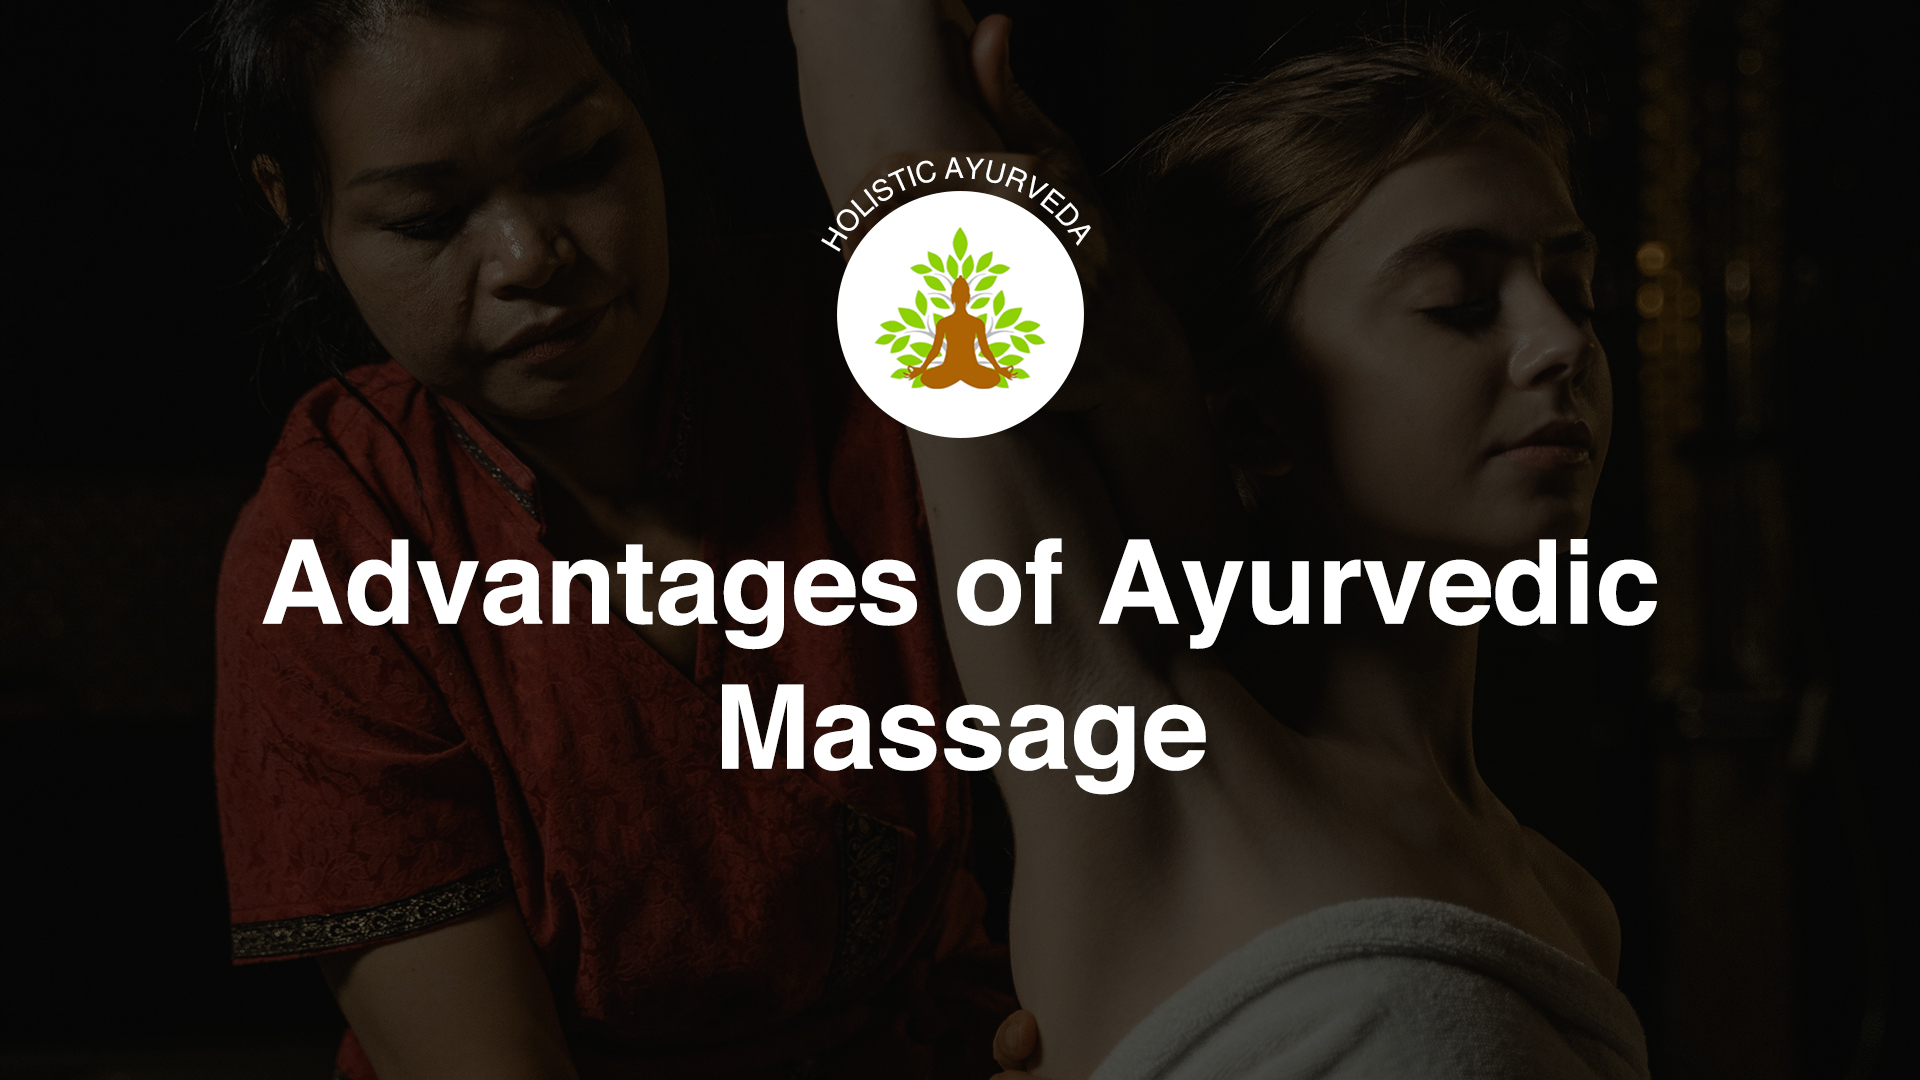 Advantages of Ayurvedic Massage - oC AYUg A
oy Q
®

Advantages of Ayurvedic
Massage